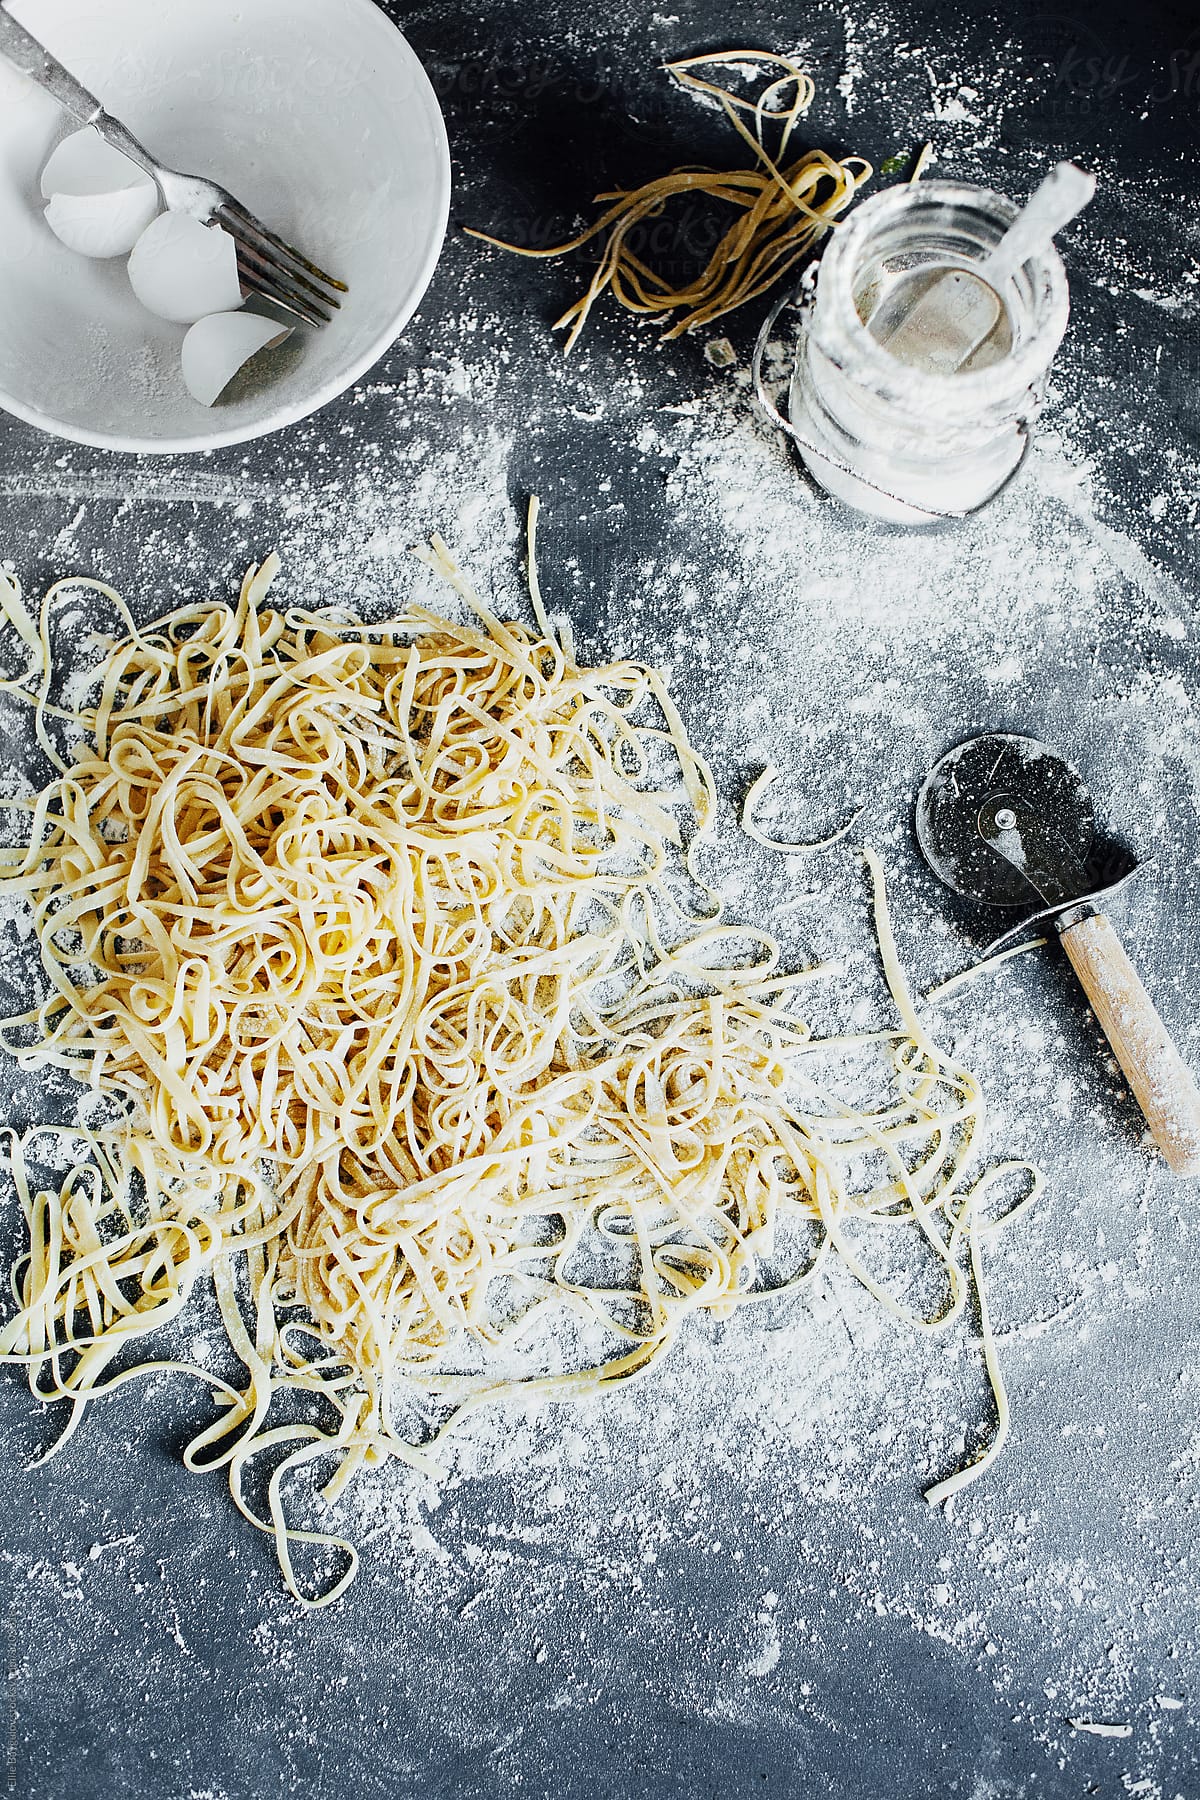 Homemade spaghetti in process